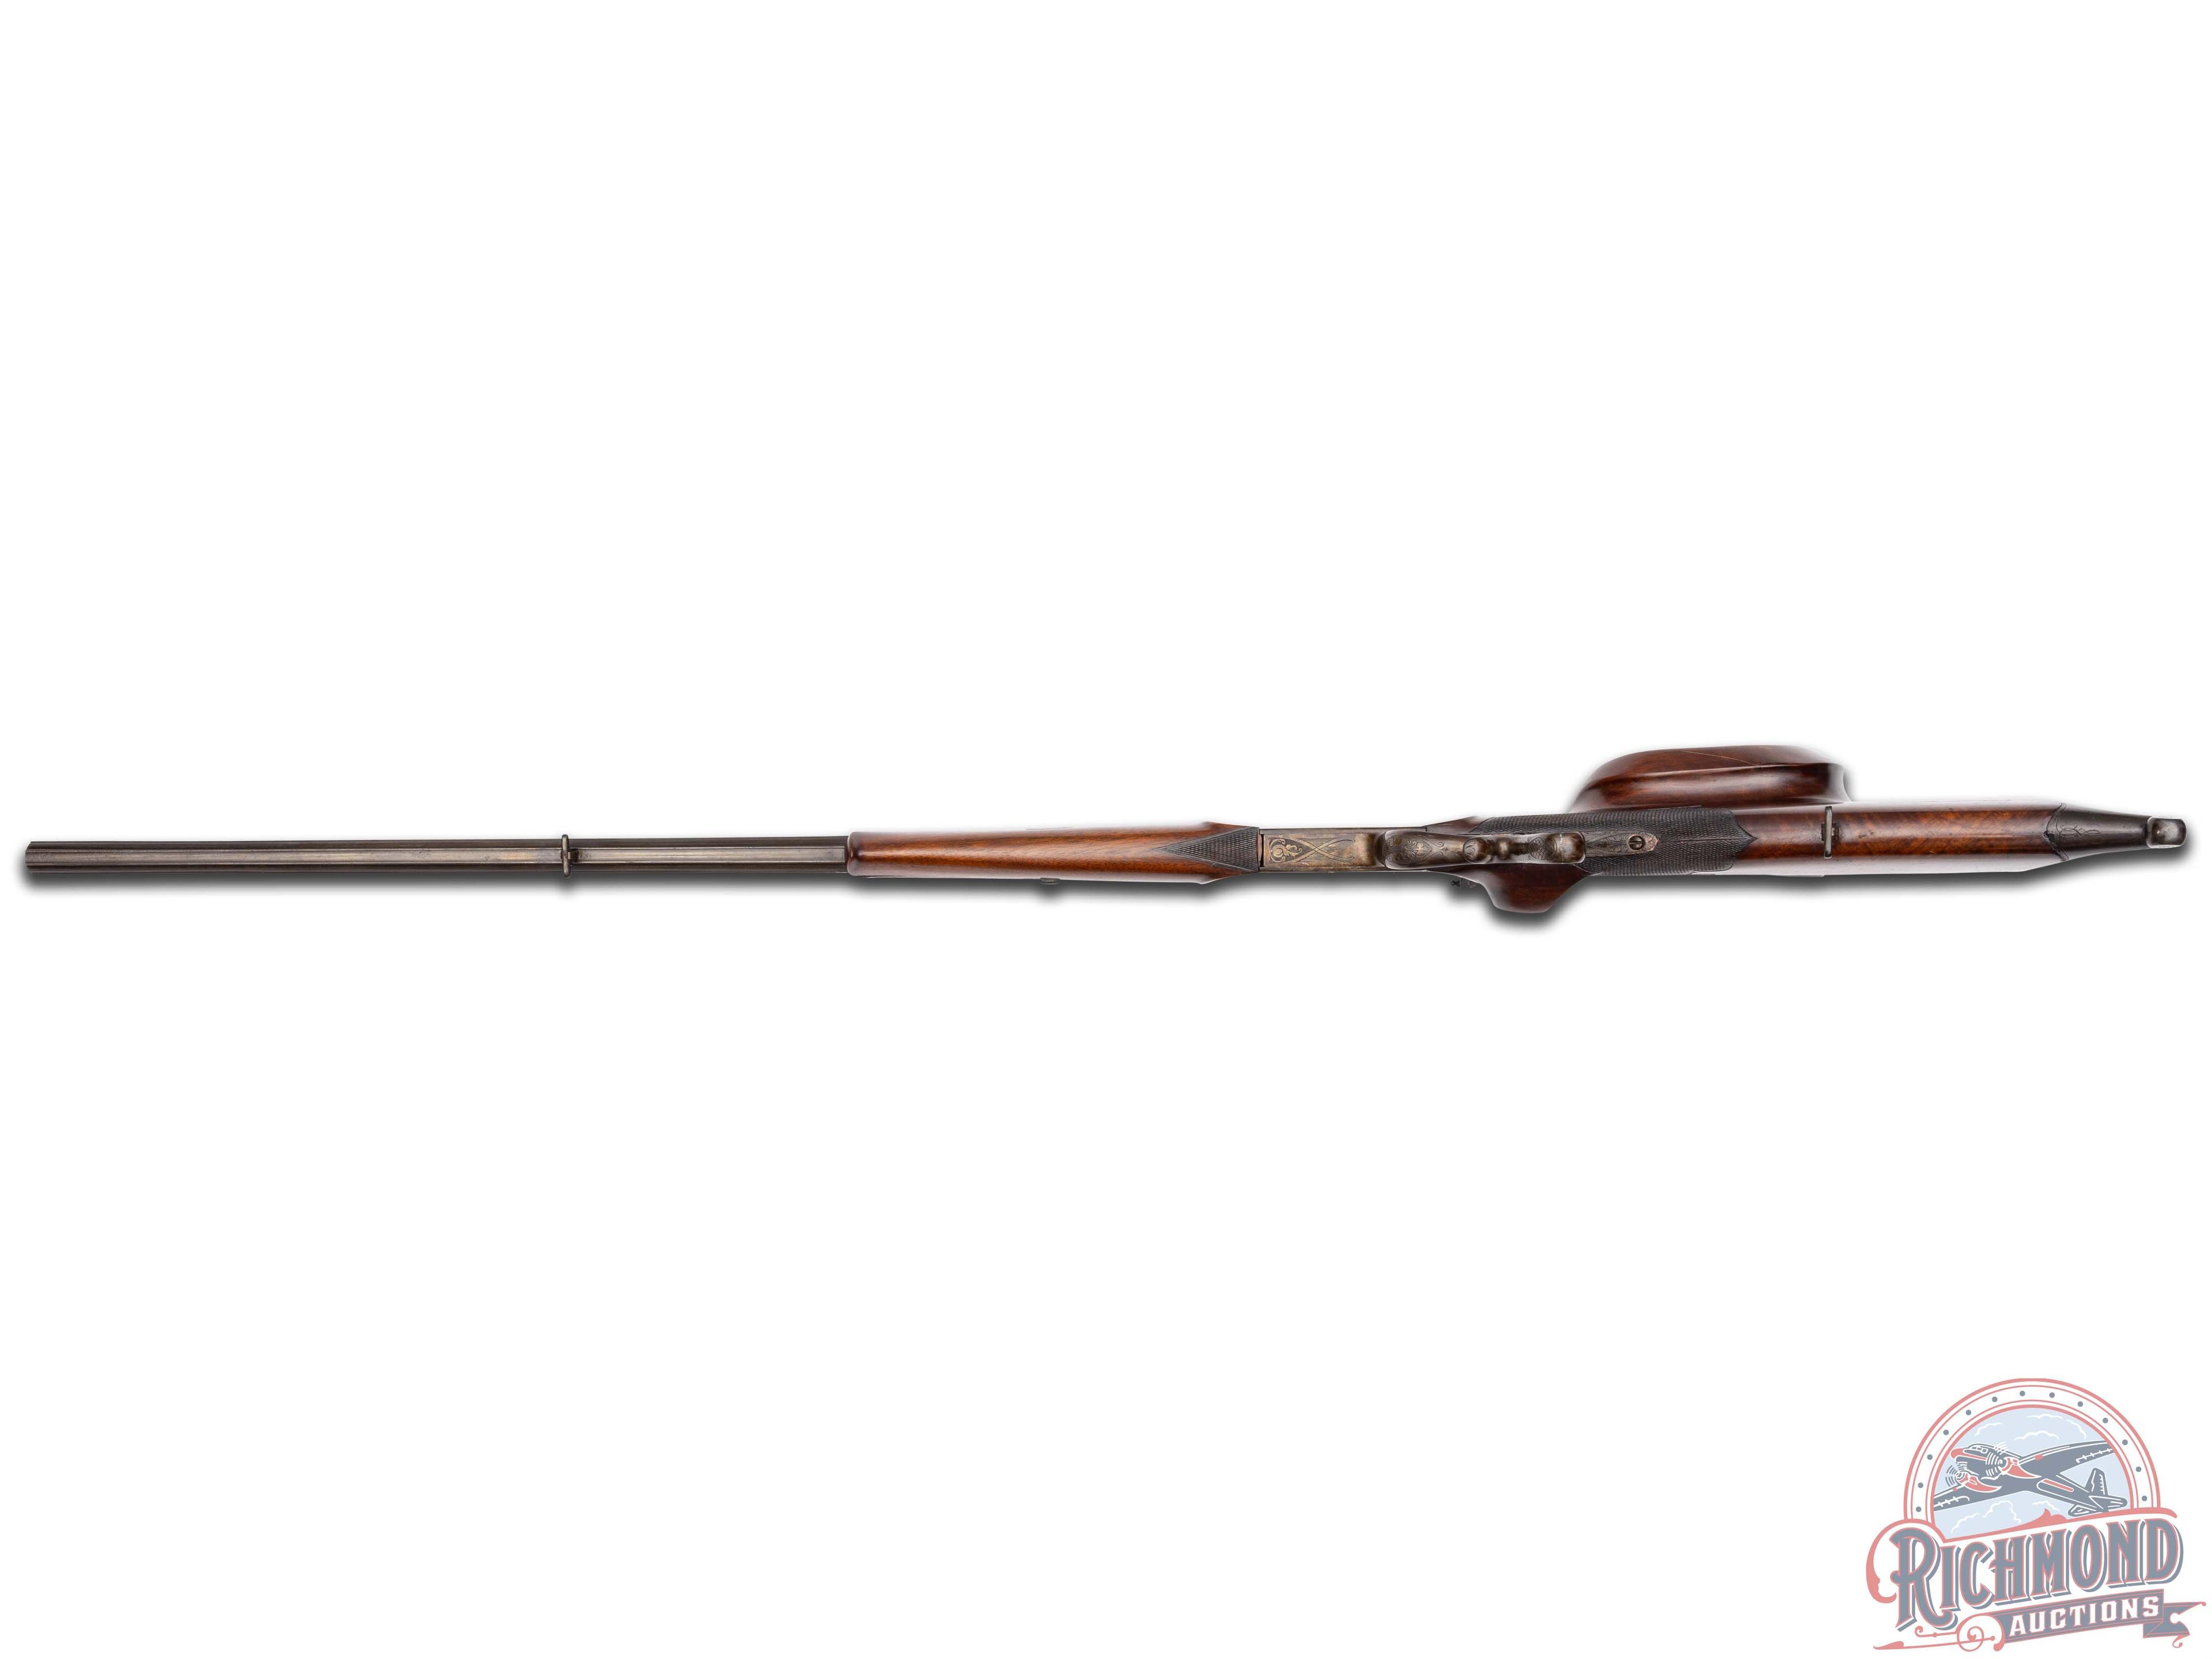 Heavily Engraved Early 20th Century German Schuetzen Falling Block Single Shot 8.15mm Rifle